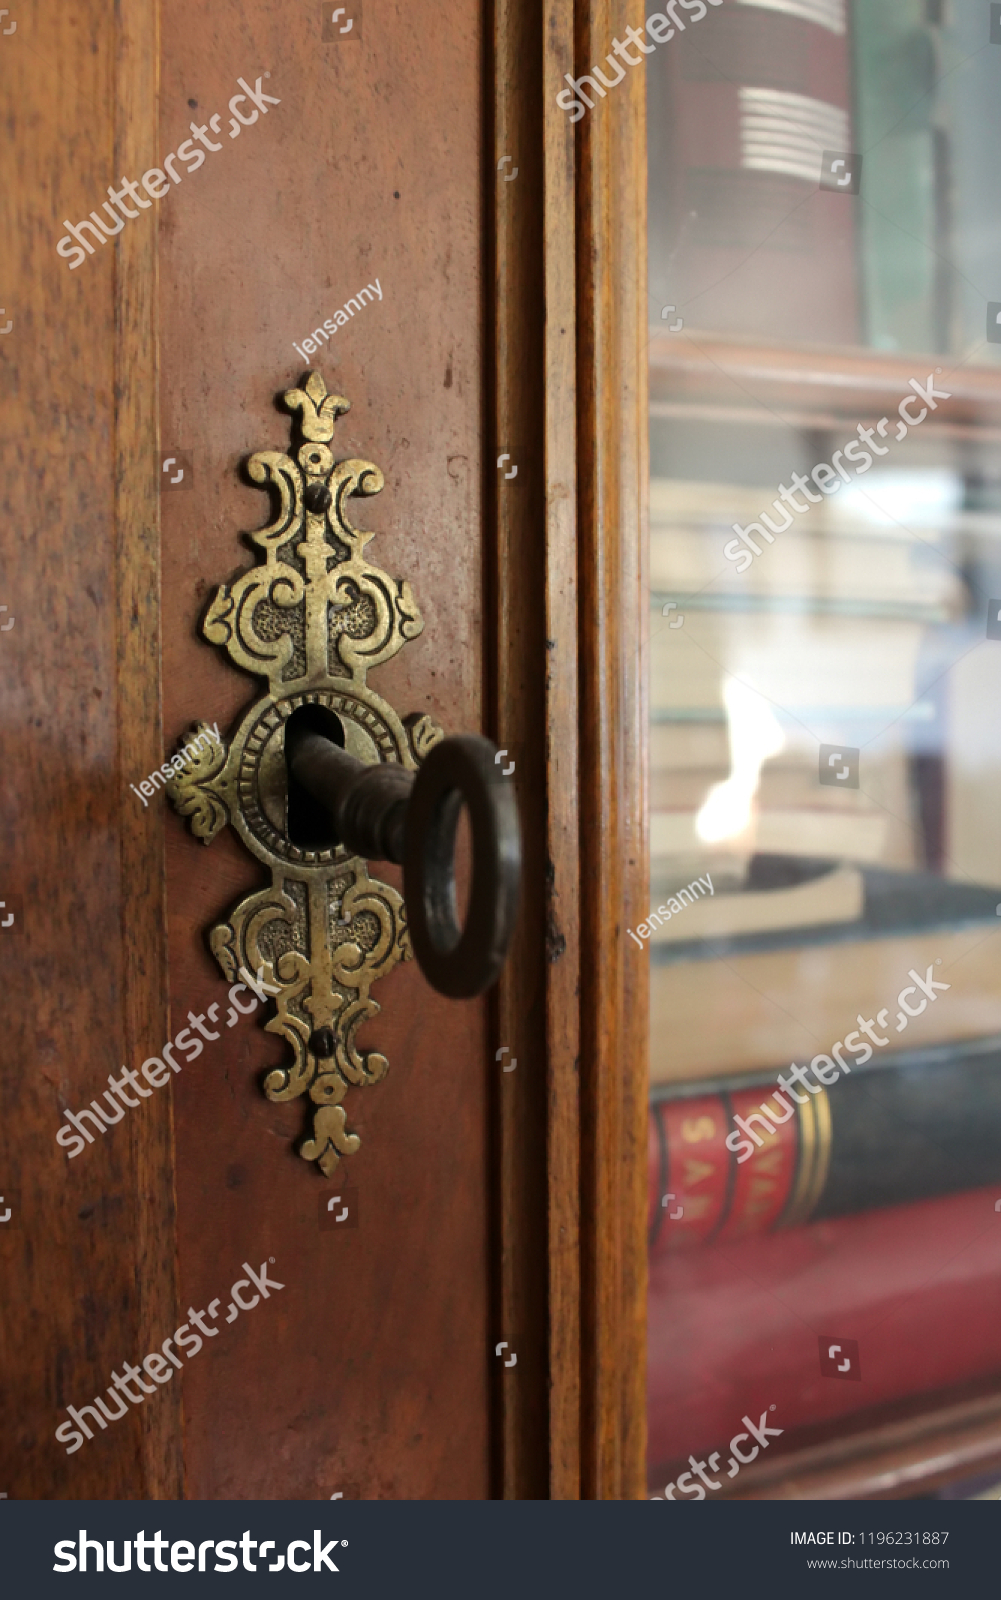 Old Lock Key On Antique Bookshelf Stock Photo Edit Now 1196231887